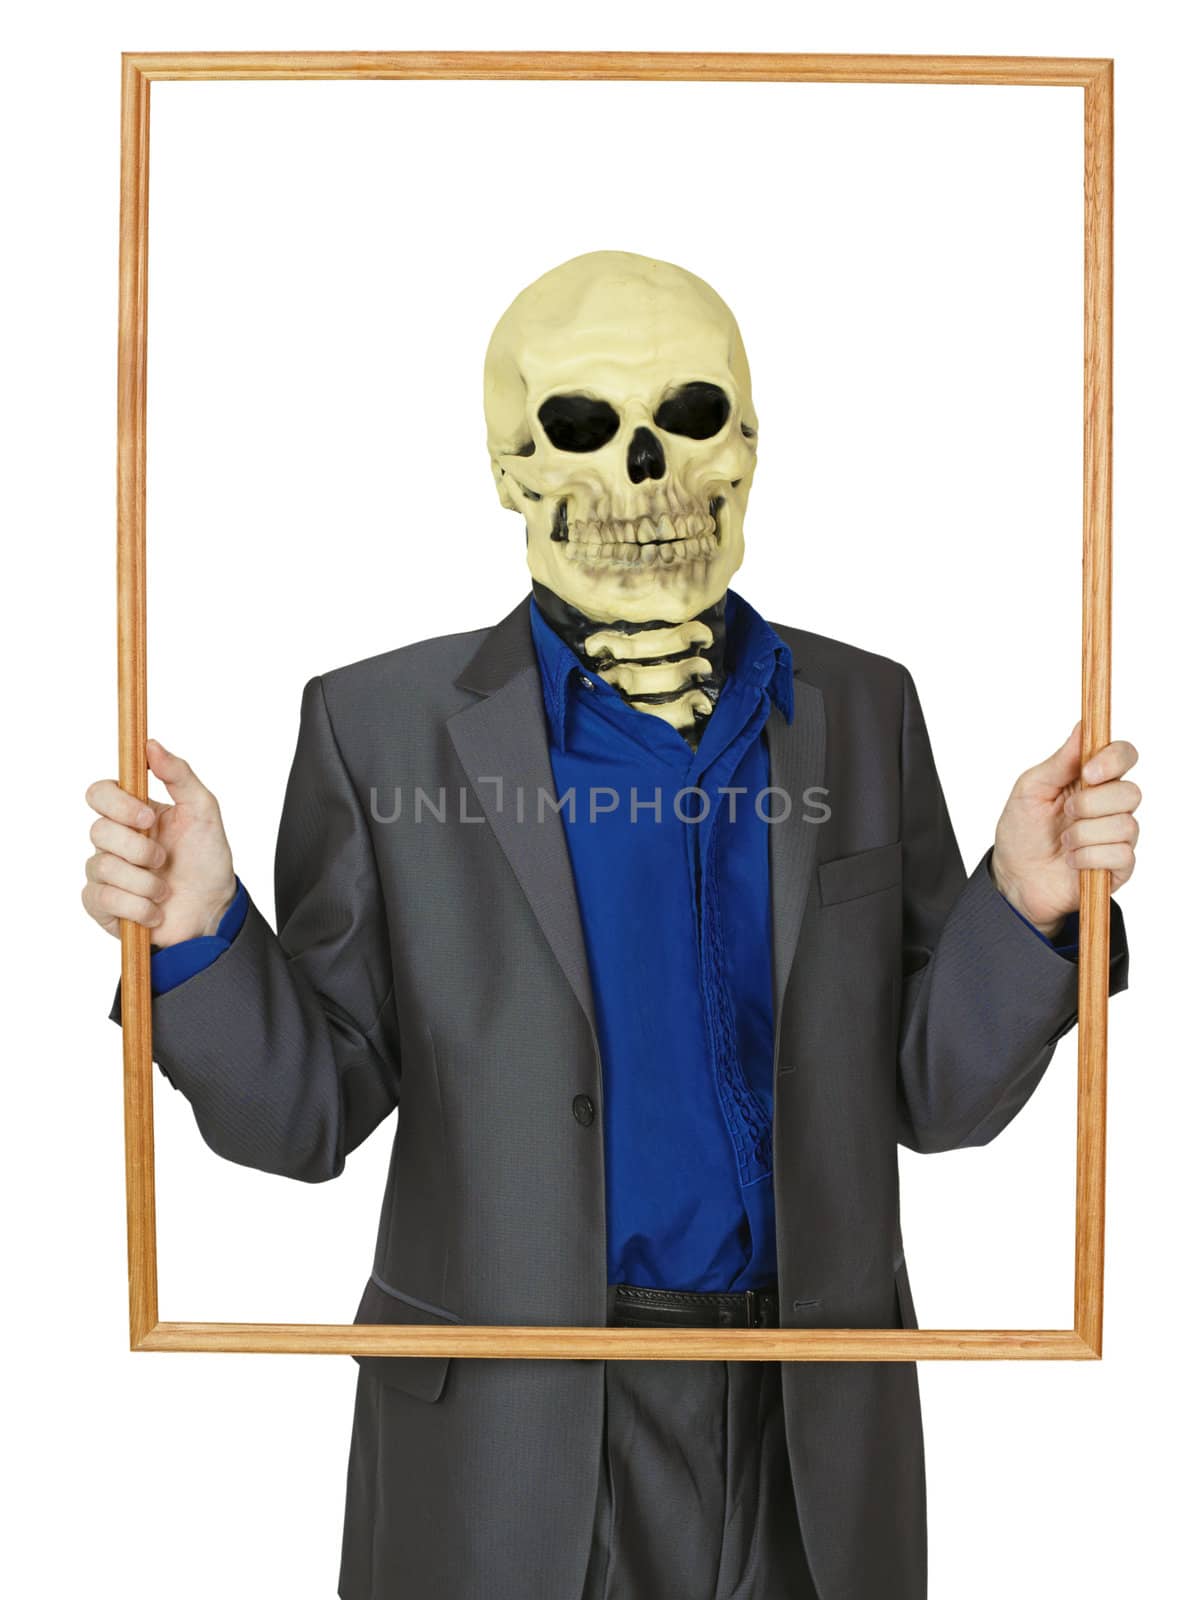 The masked man skeleton, placed himself in the frame